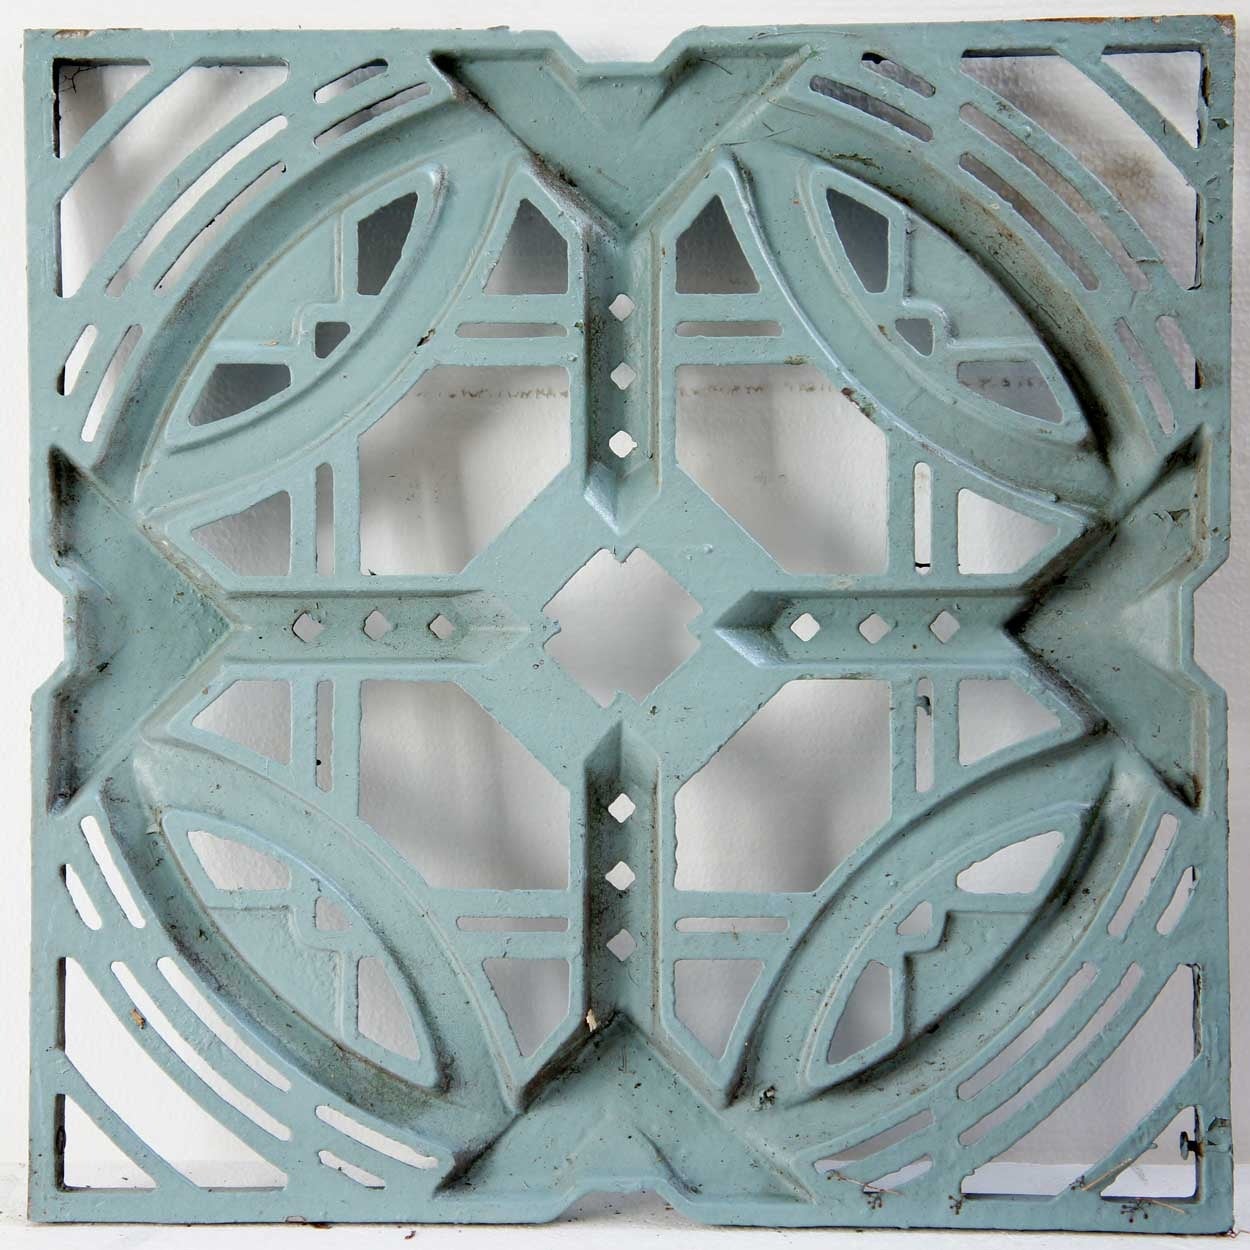 Designer: John deKoven Hill (American, 1920-96) | Manufacturer: Schmidt Ornamental Iron Works (Evanston, IL)
 
Provenance: Fence panels for the Hyde Park Redevelopment project (1503-09 East 56th Street, Chicago, IL) near the University of Chicago.